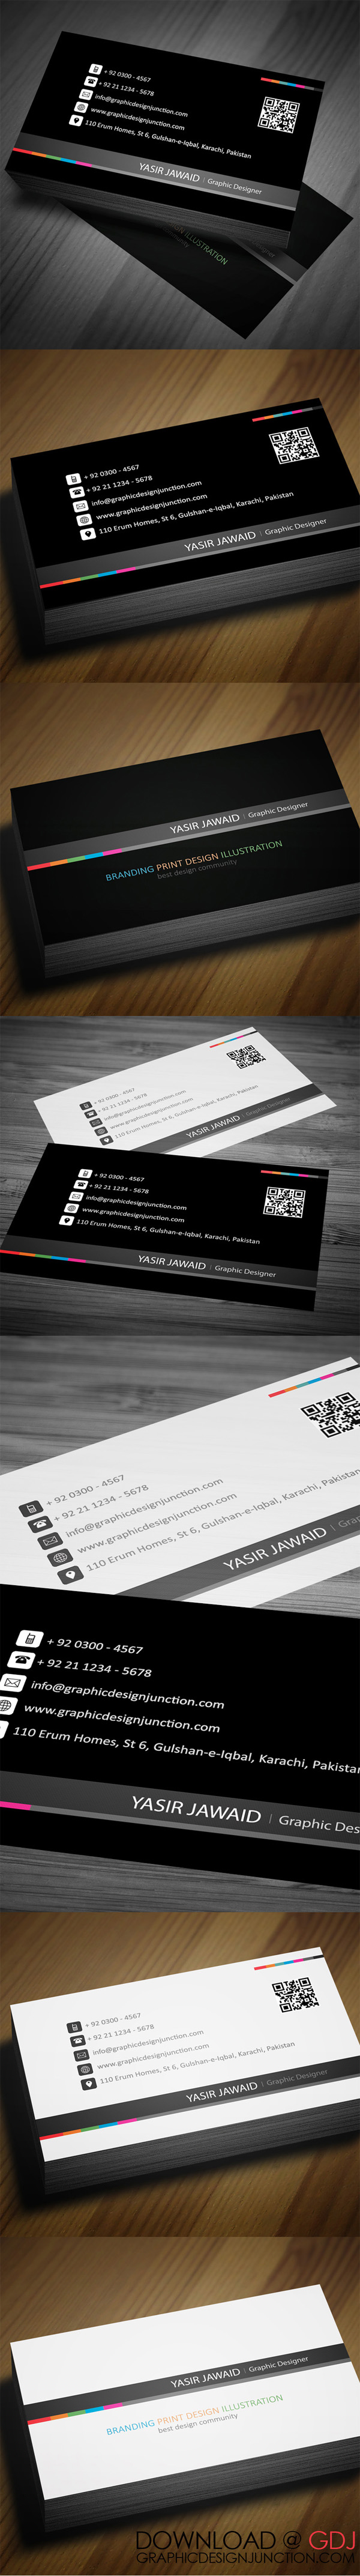 Creative Print Ready PSD Business Card Design